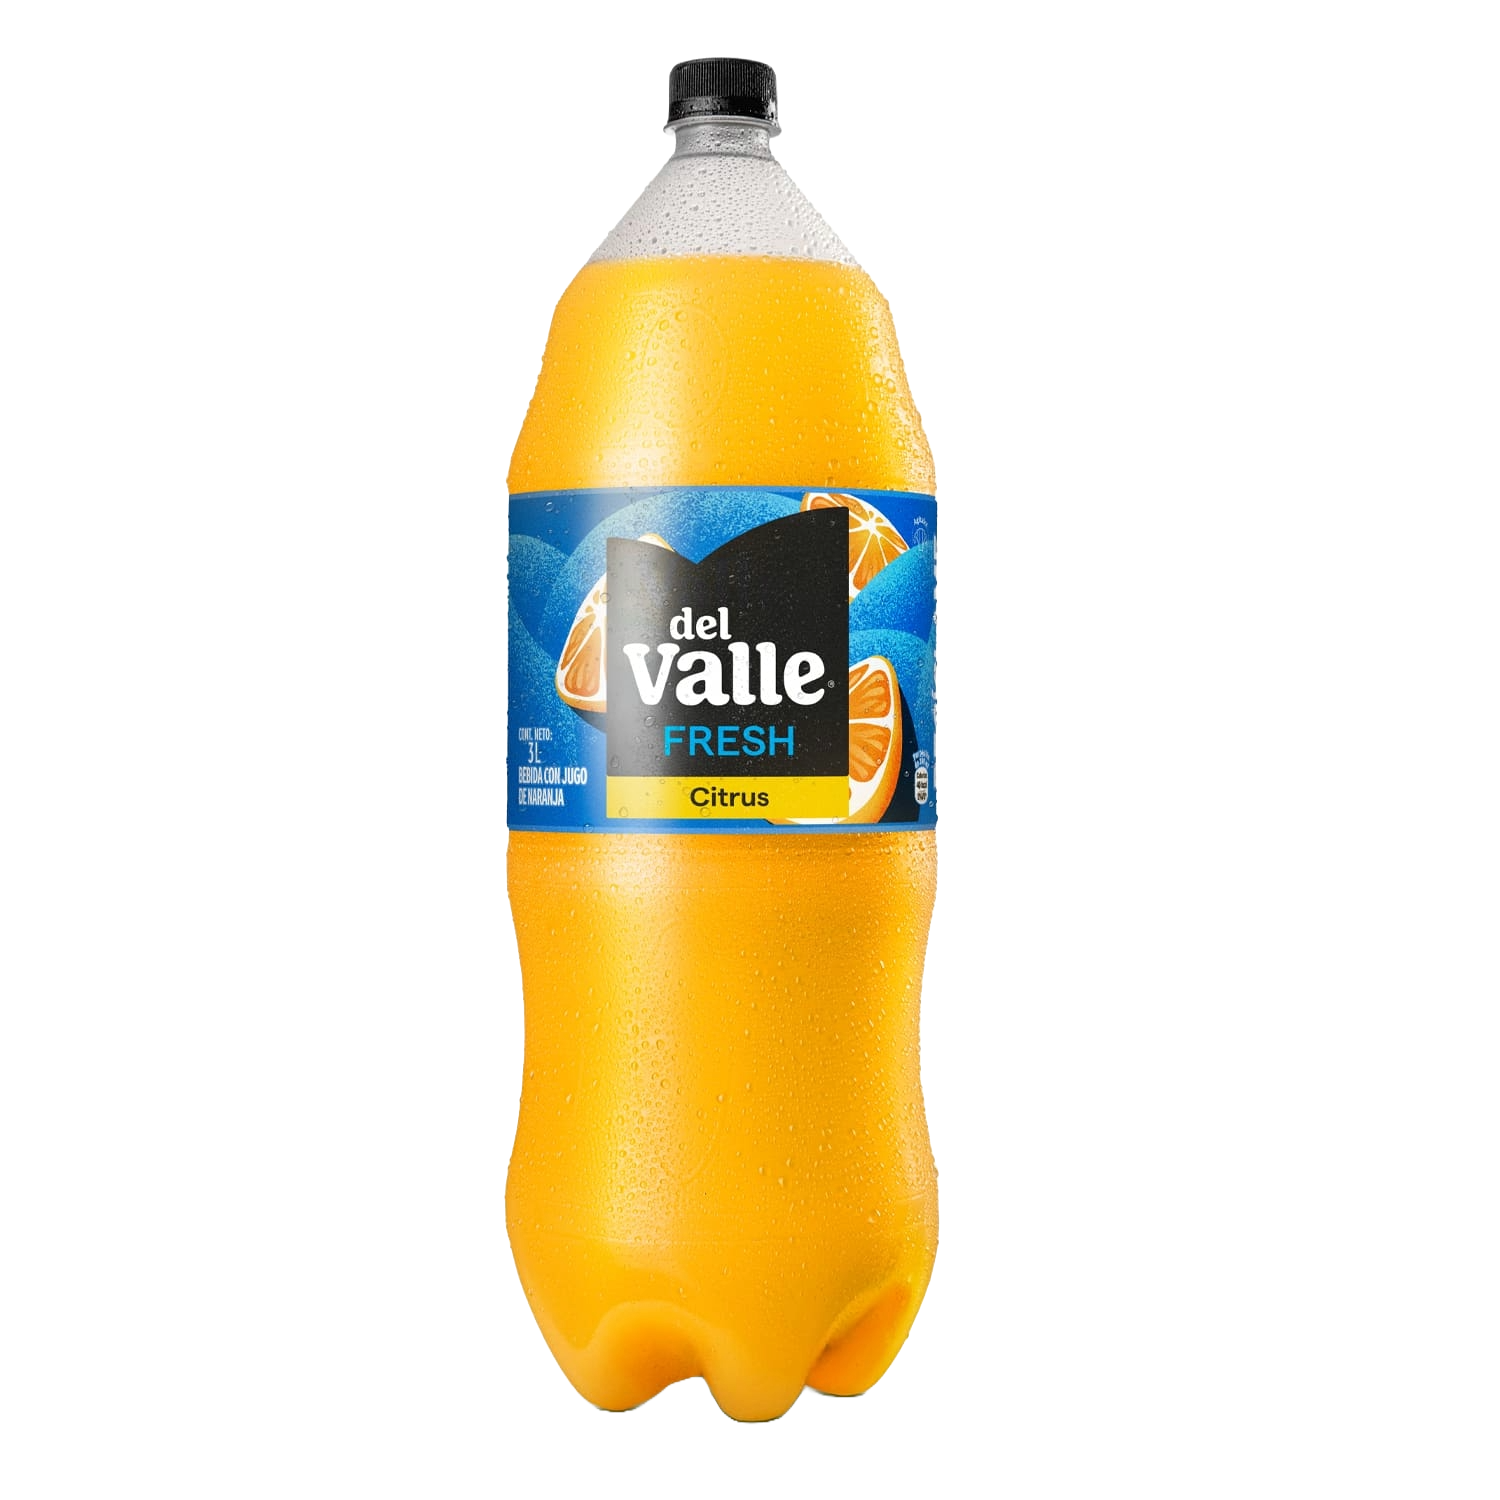 Botella de Del Valle Fresh Citrus 3L